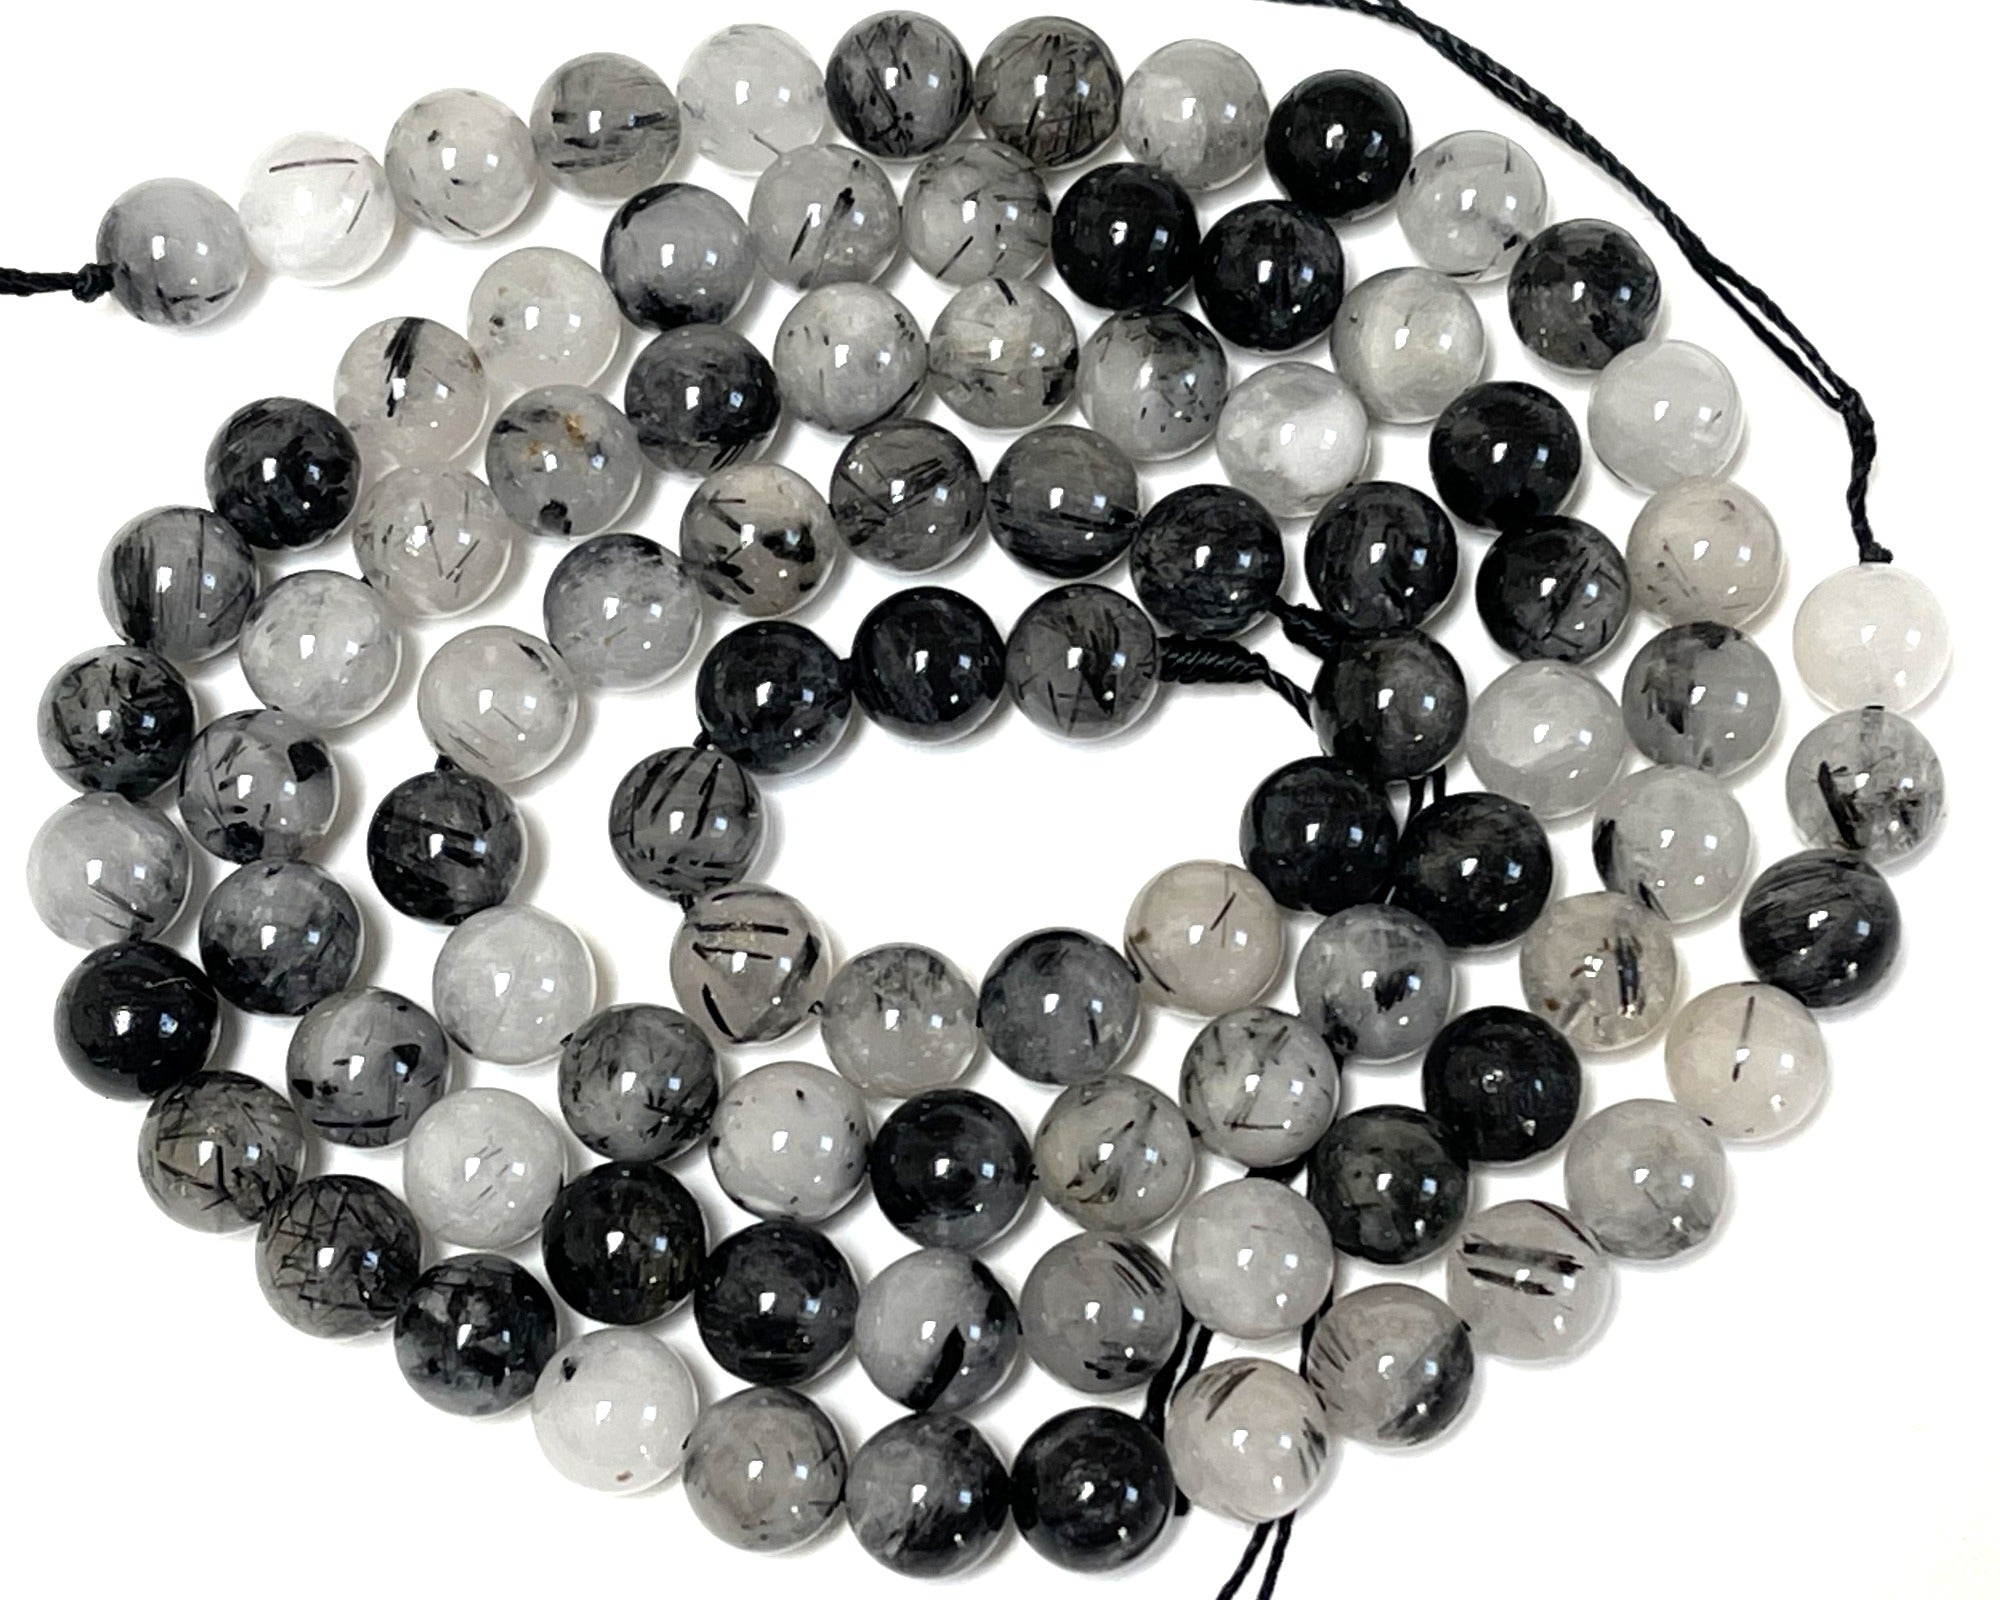 Black Tourmaline Rutilated Quartz 8mm round natural gemstone beads 15" strand - Oz Beads 